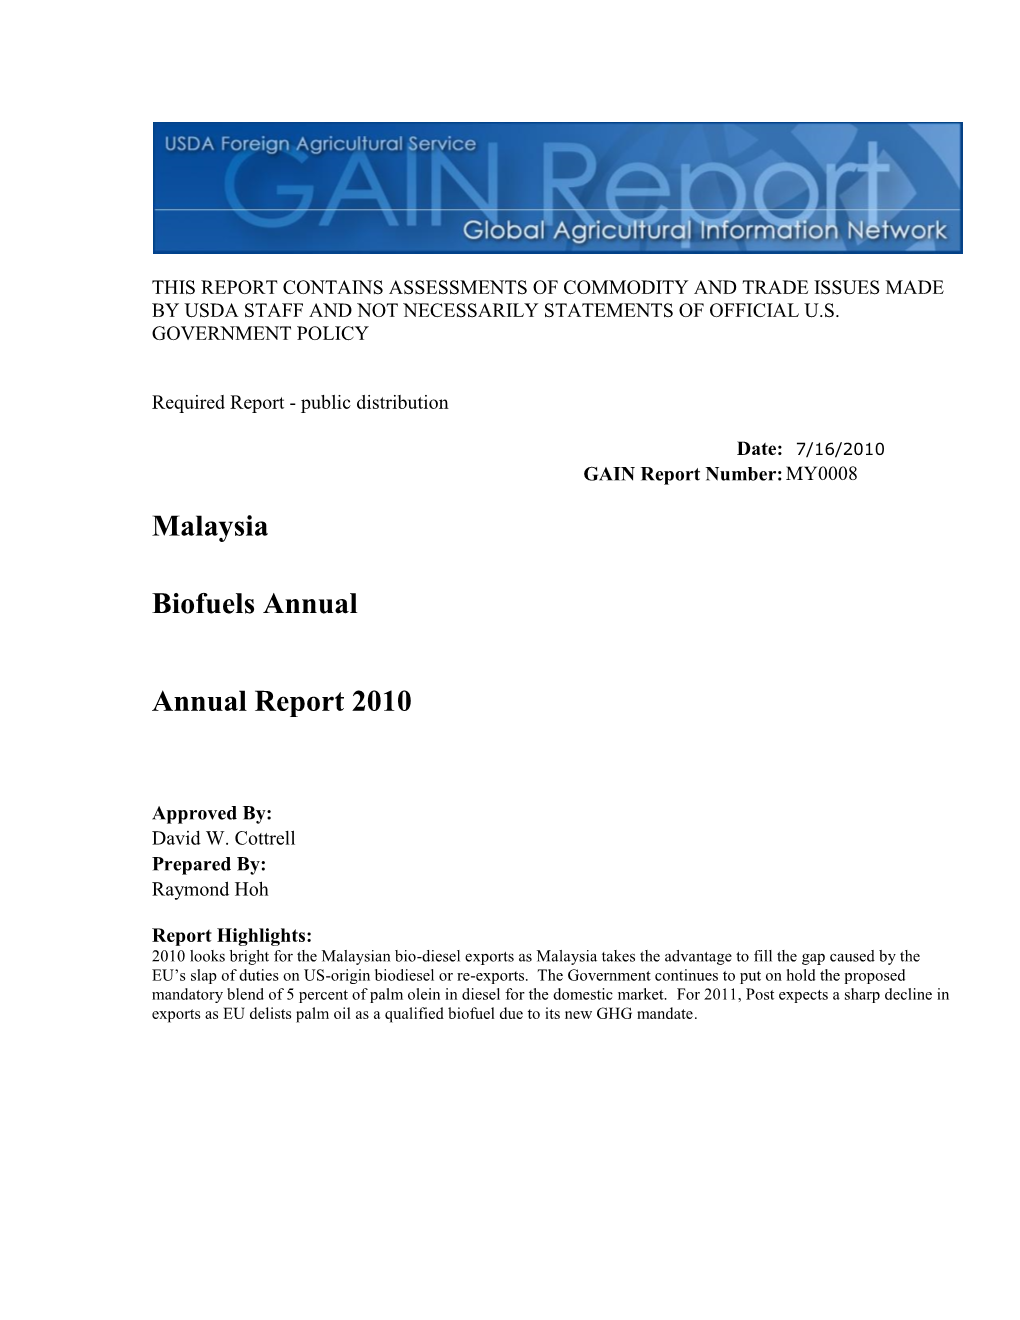 Malaysia Biofuels Annual Annual Report 2010